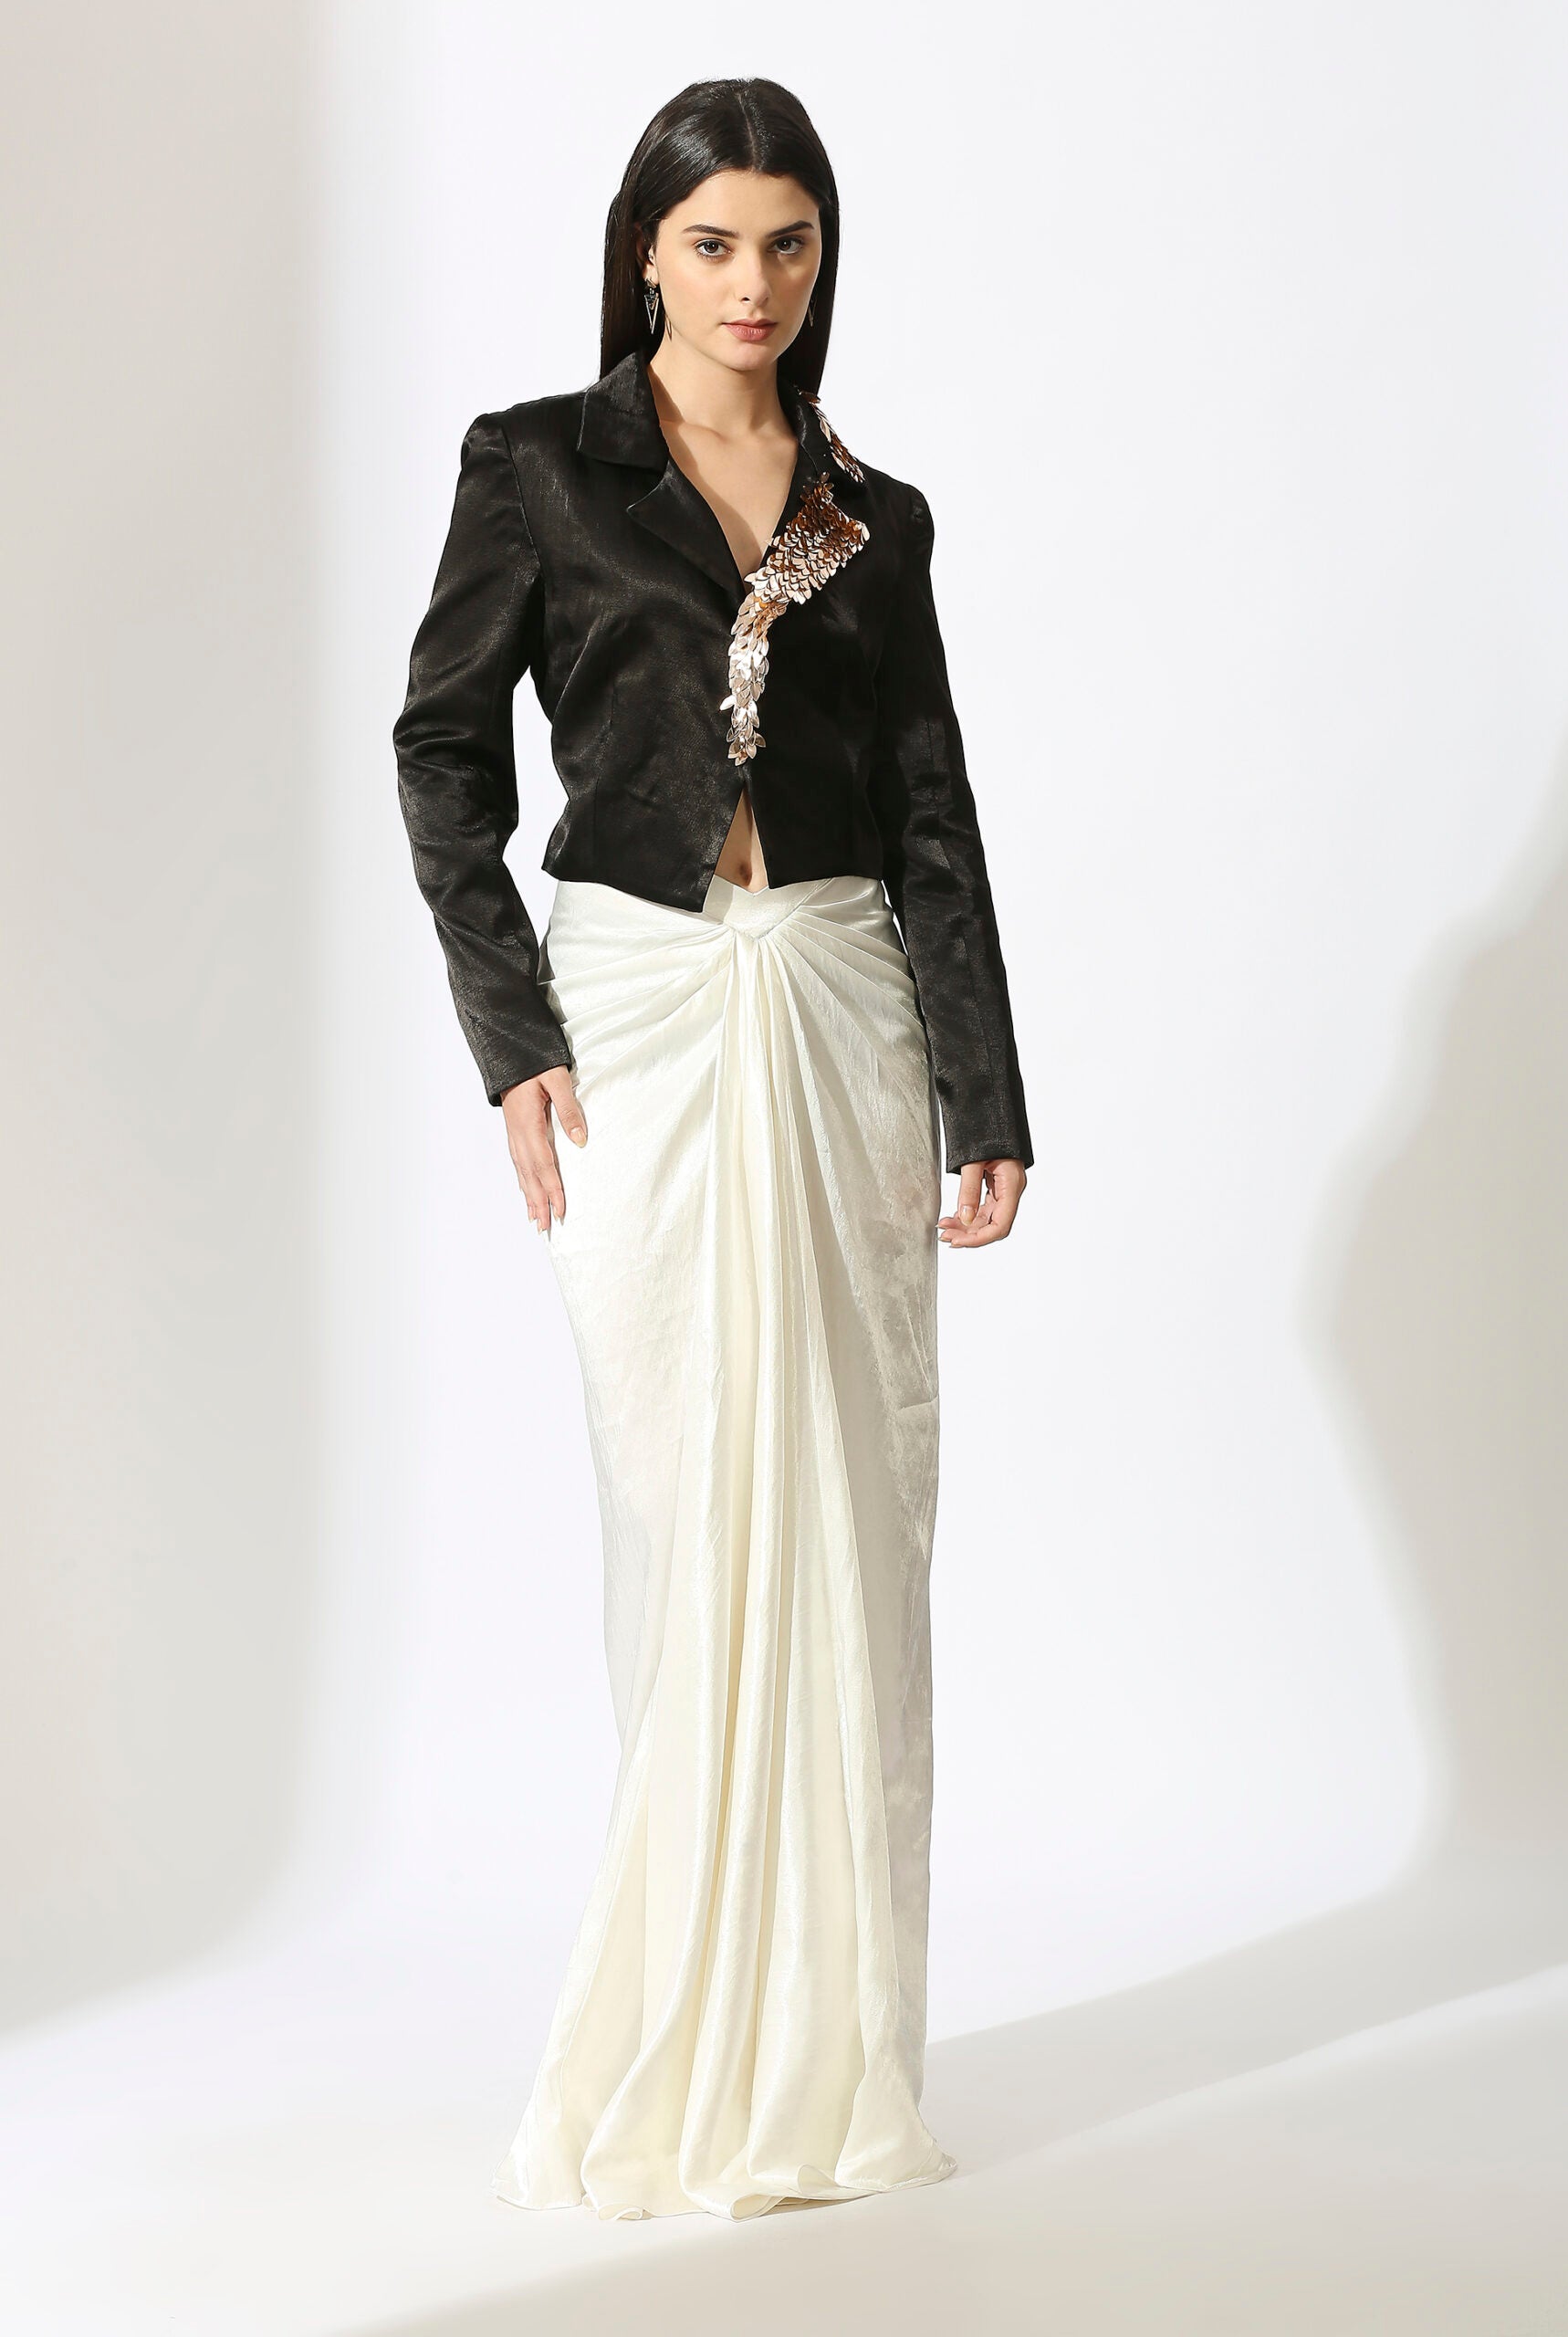 Black Embroidered Blazer with White Draped Skirt